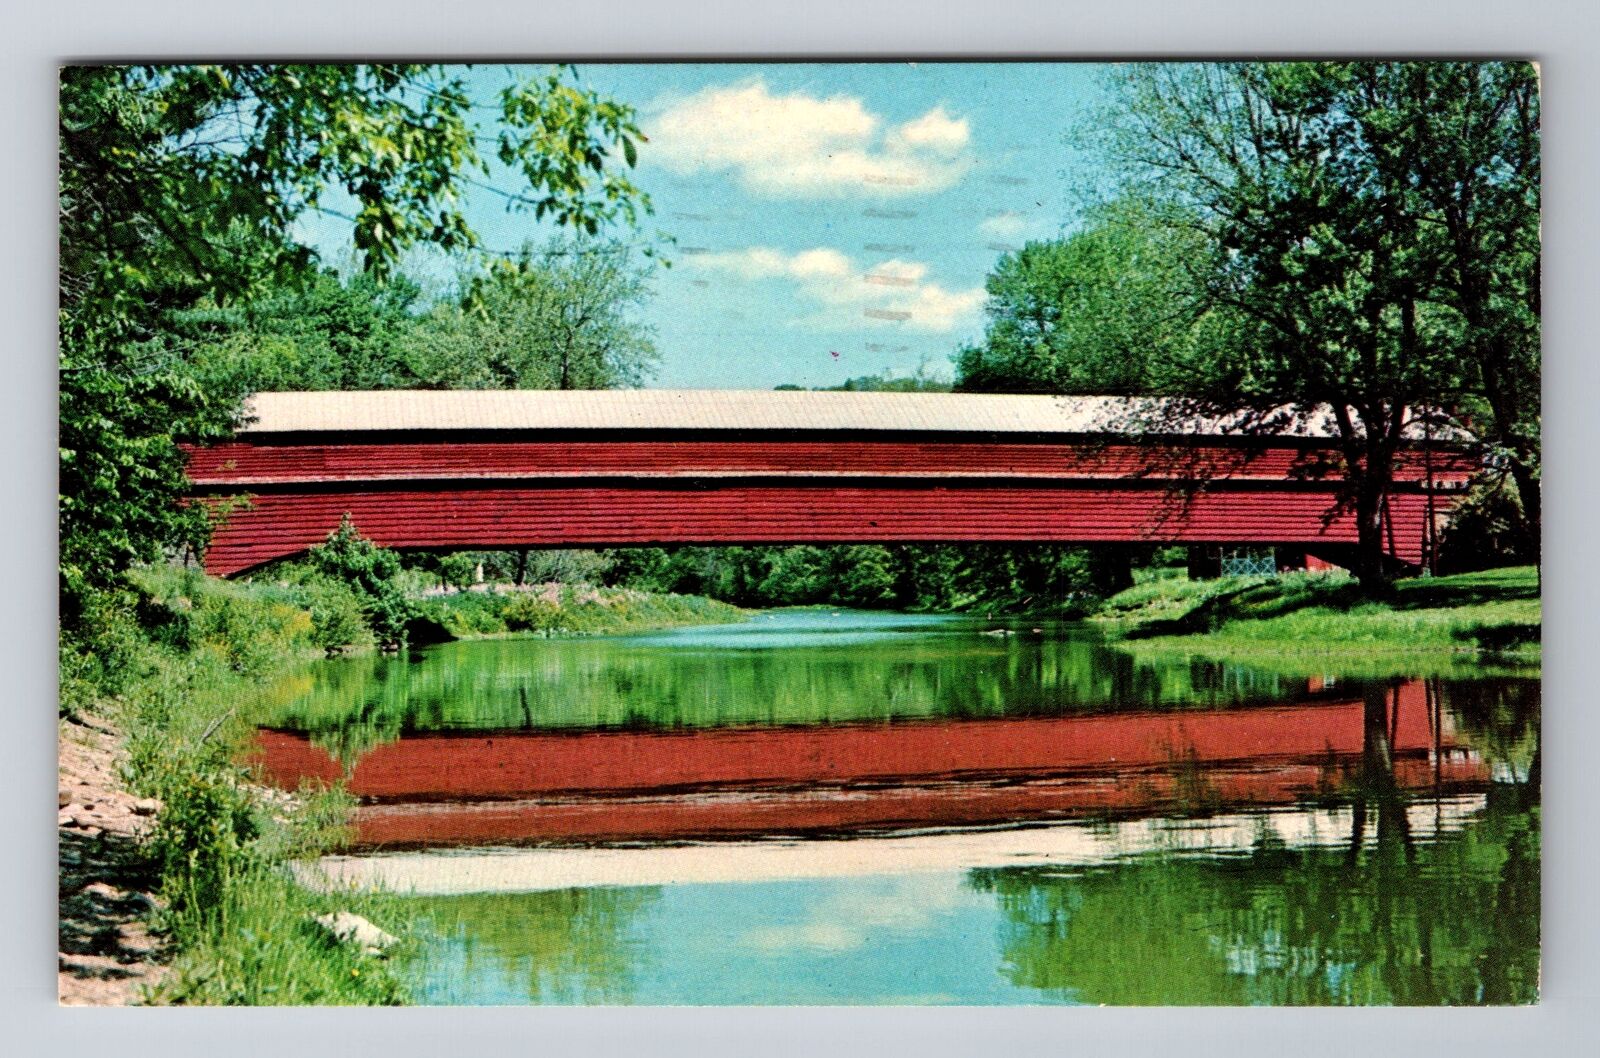 Virginville PA-Pennsylvania, Dreibelbis Station Covered Bridge, Vintage Postcard